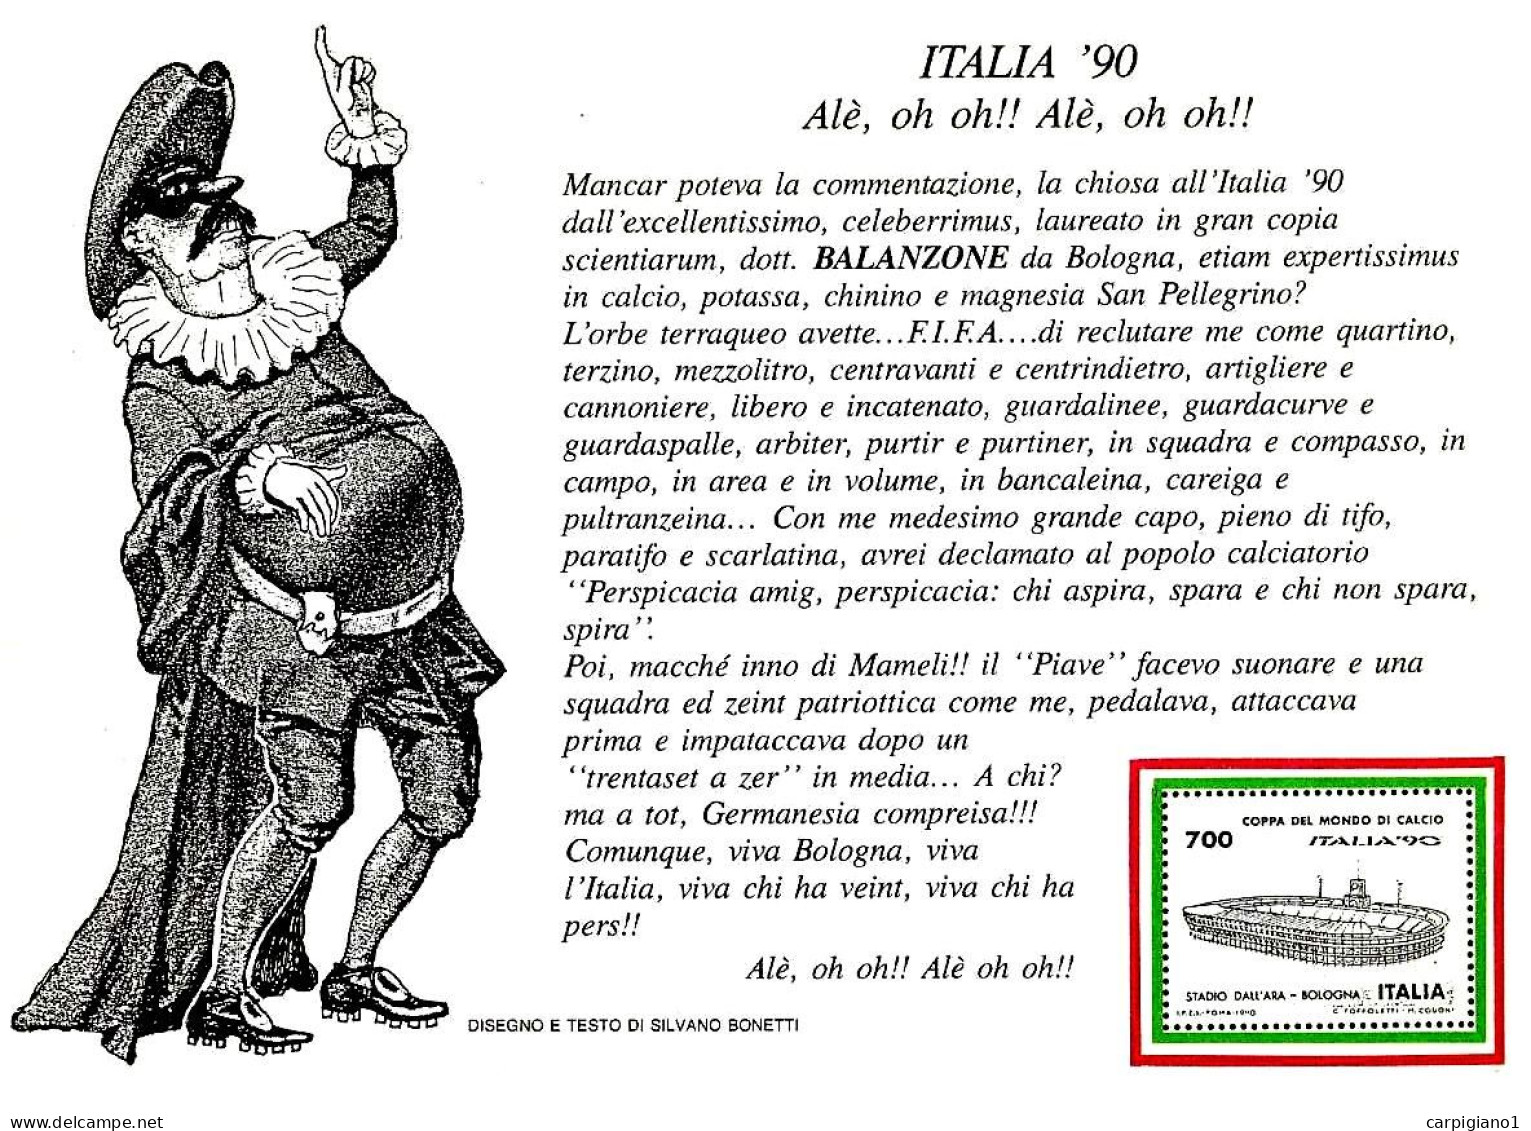 ITALIA ITALY - 1990 BOLOGNA XXXV Bophilex Sigillo S. PETRONIO Su Cartolina AFNB - 7794 - 1981-90: Marcofilie